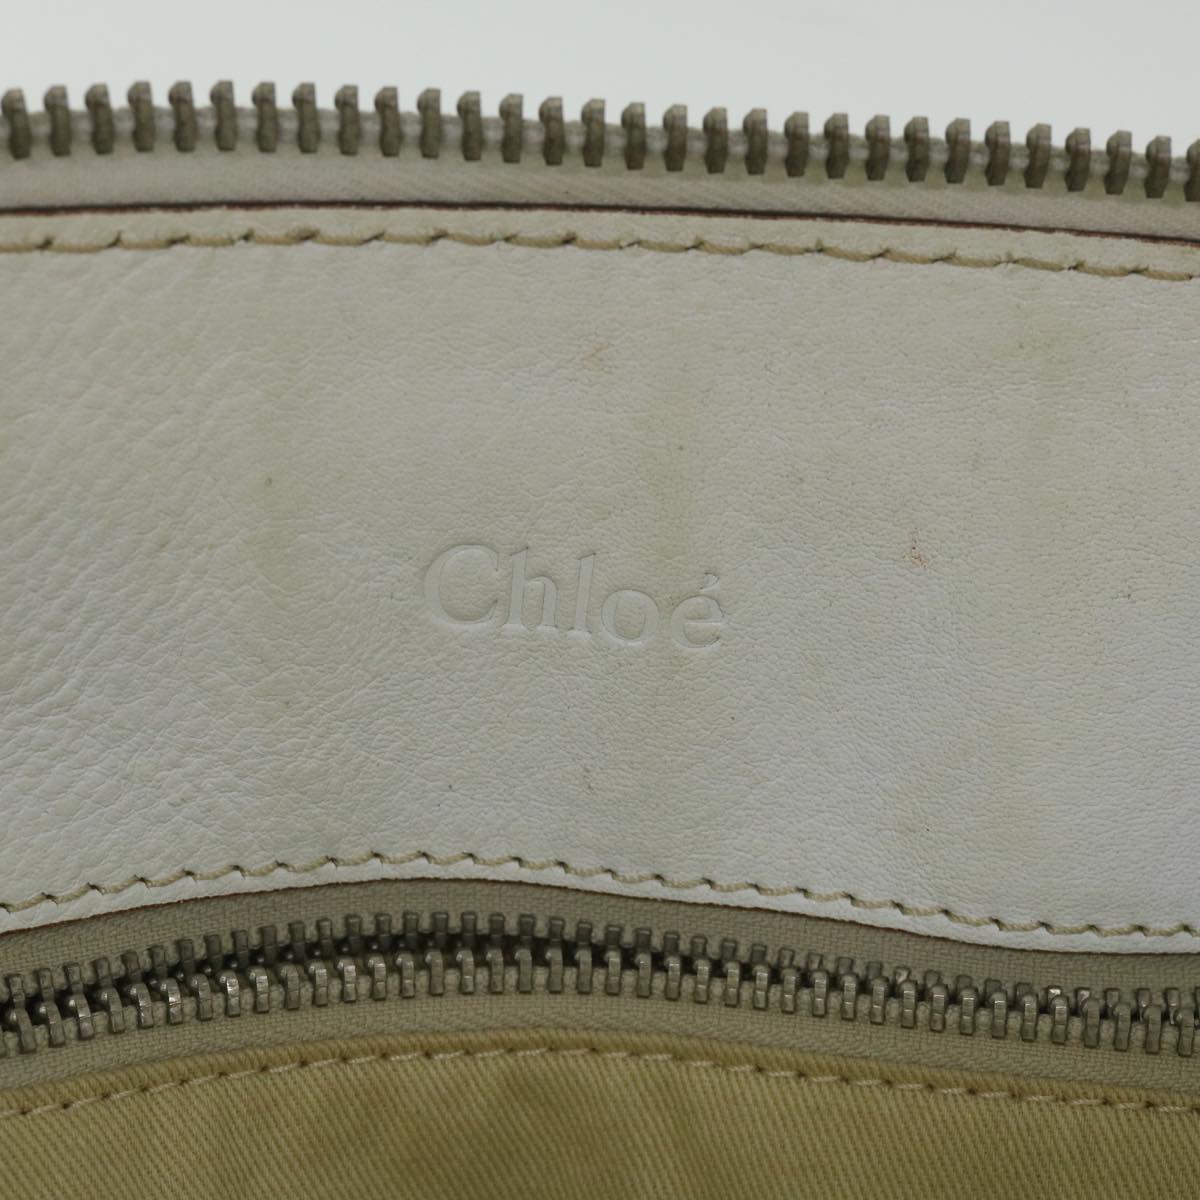 Chloe Hand Bag Leather White Auth ar10441